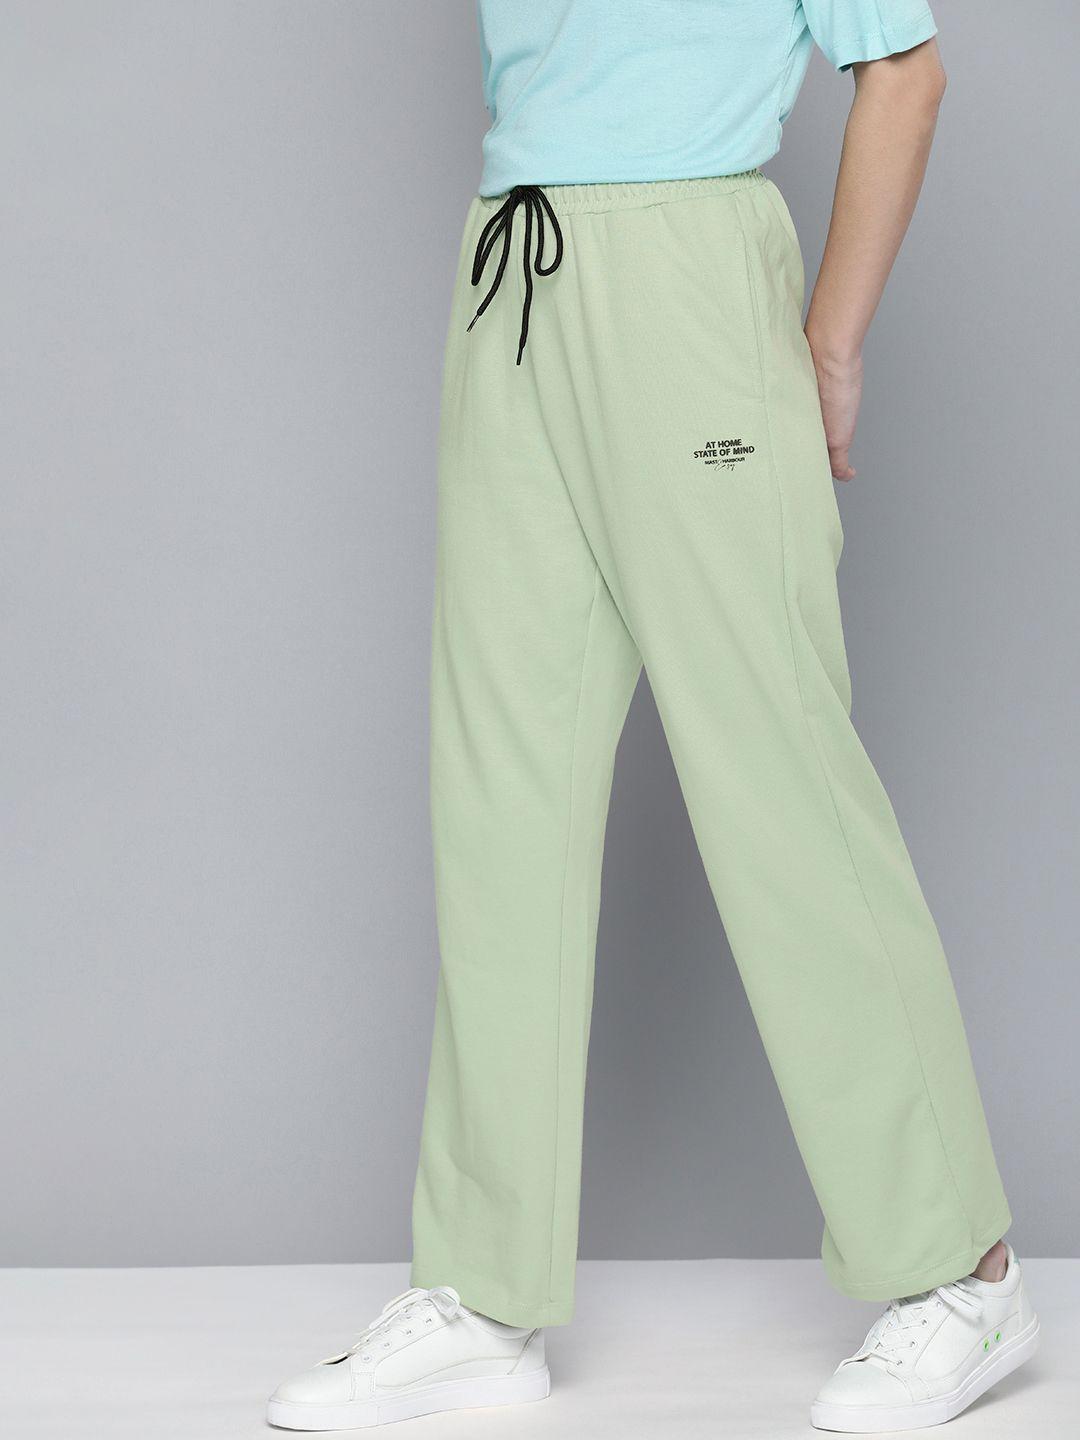 m&h easy women light green & black printed track pants